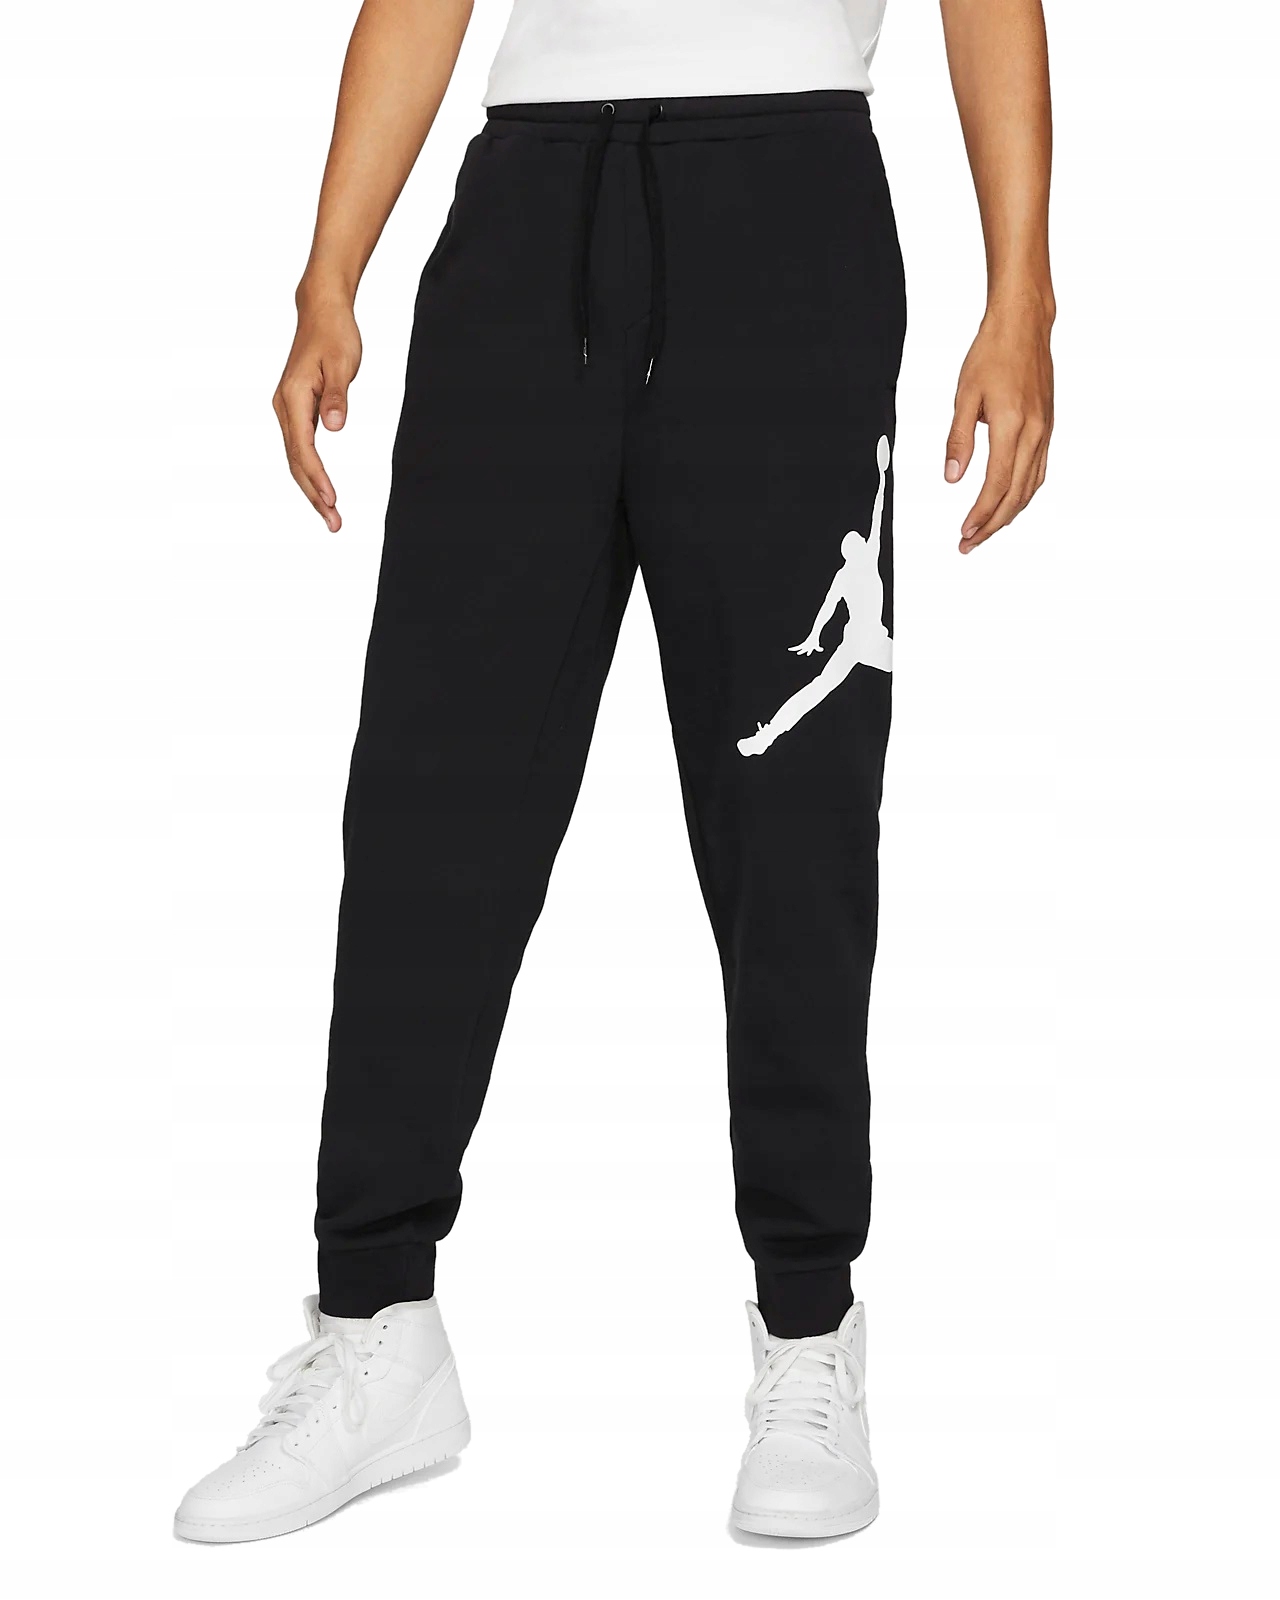 Spodnie Nike Jordan Jumpman logo Dresy Jogger lebr 11576411304 - Allegro.pl